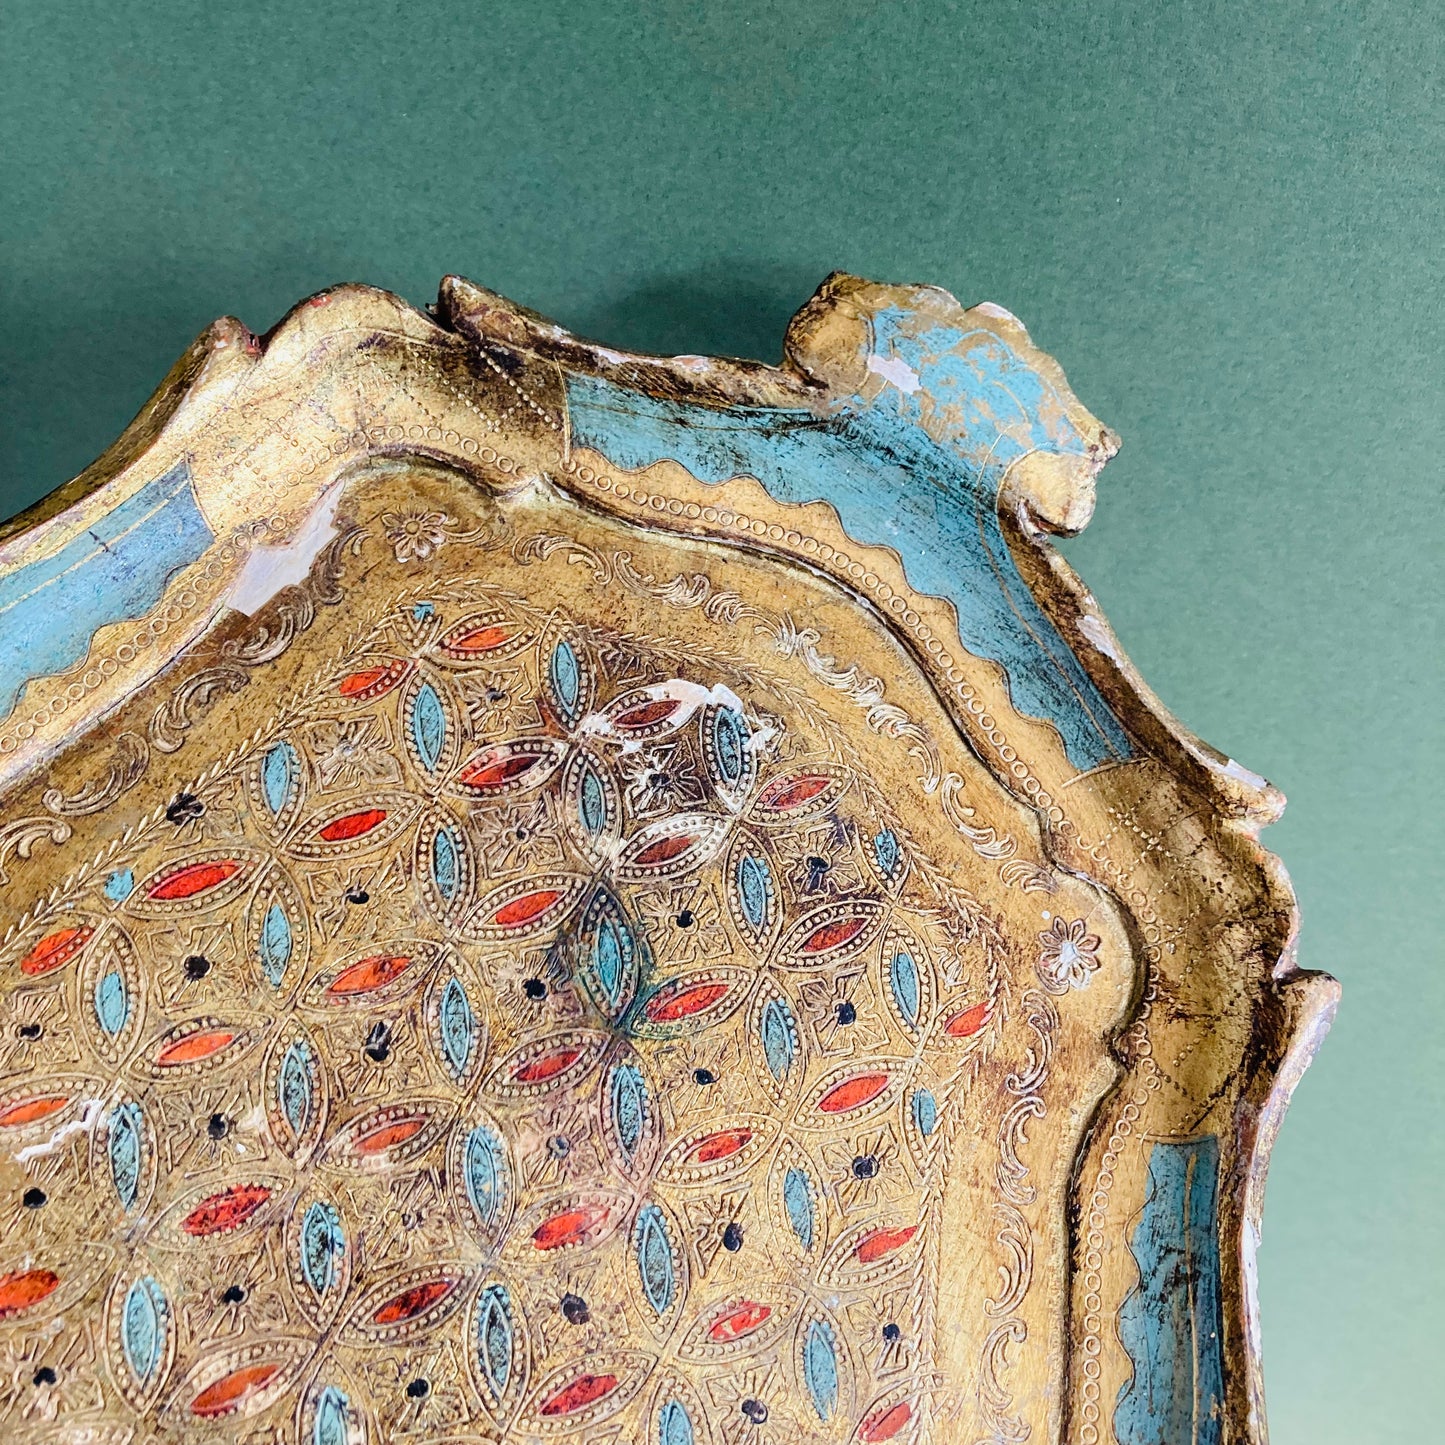  Antique Florentine Paper Mache Tray | The Urban Vintage Affair